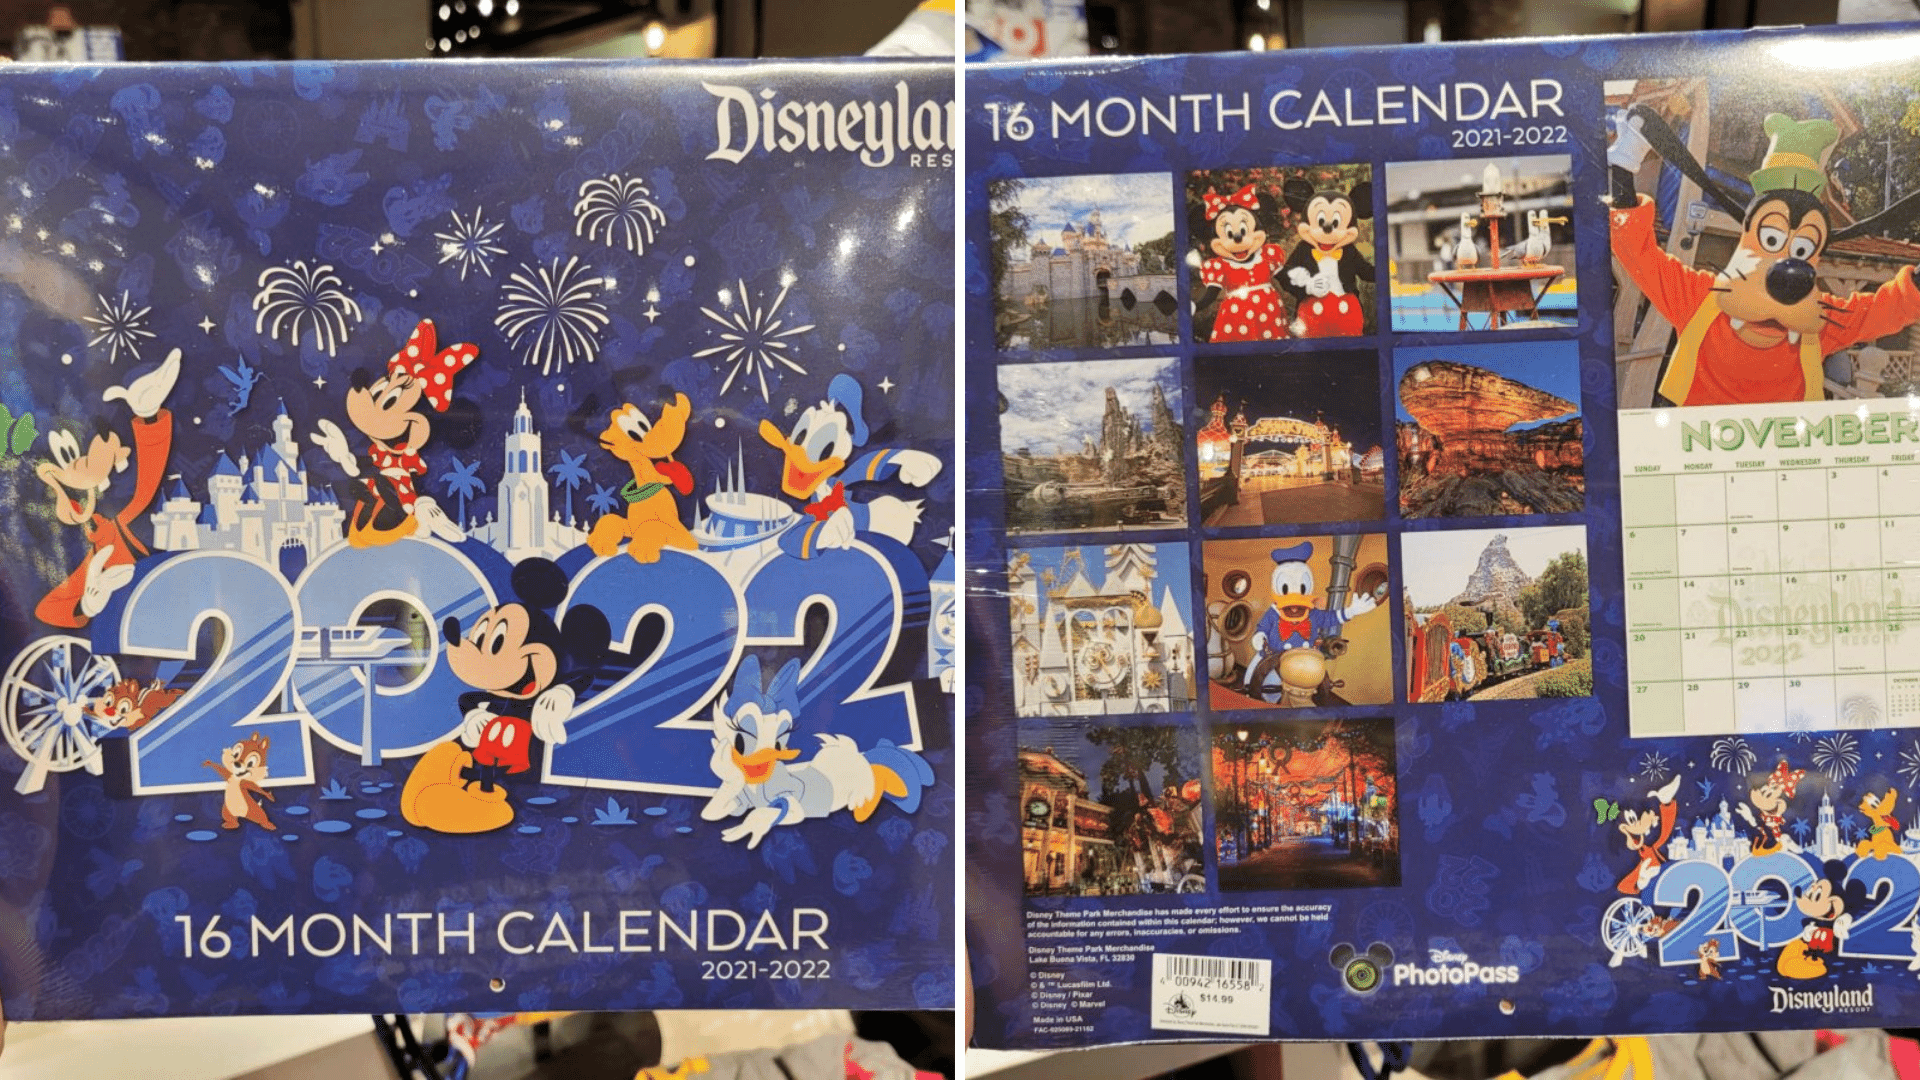 Disney Calendar 2022 Photos: 2022 Disneyland Resort 16 Month Calendar Arrives At World Of Disney  Store In Downtown Disney District - Disneyland News Today